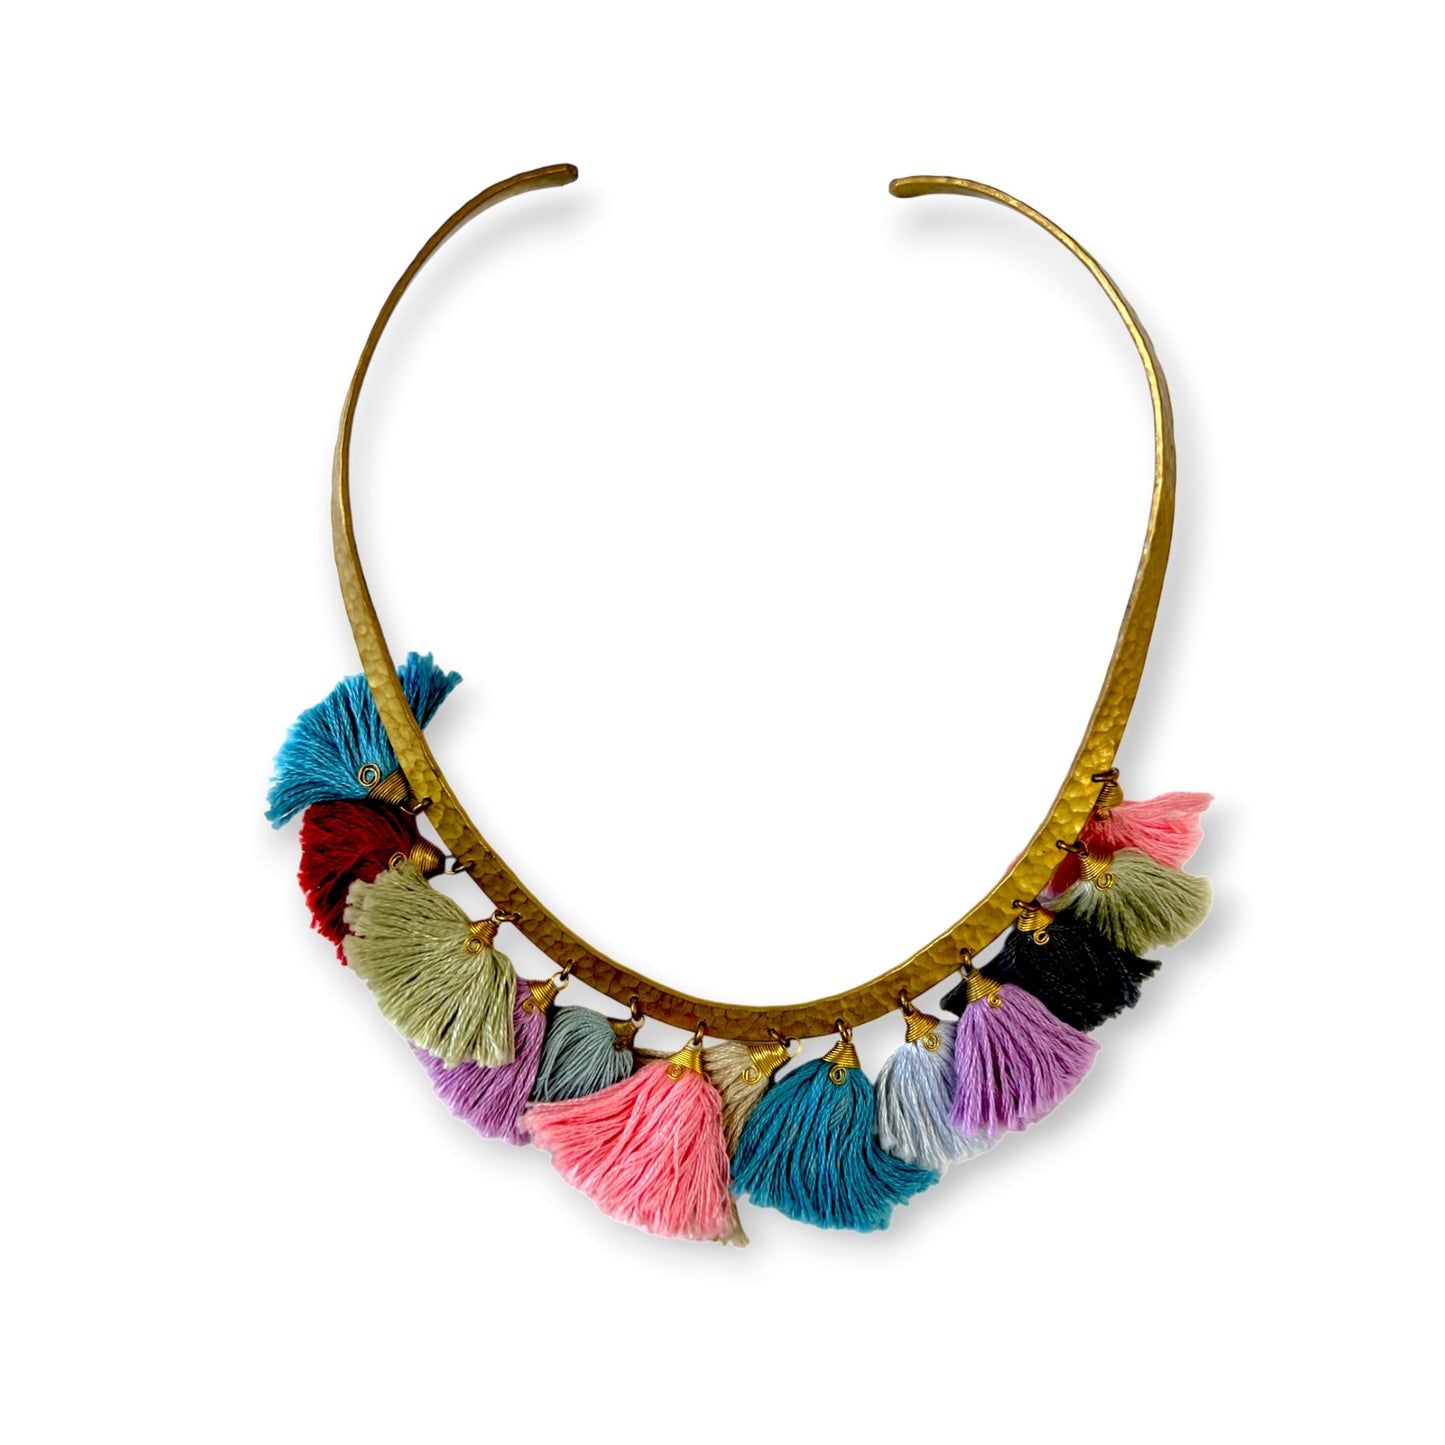 Choker necklace with colored tassels - Sundara Joon